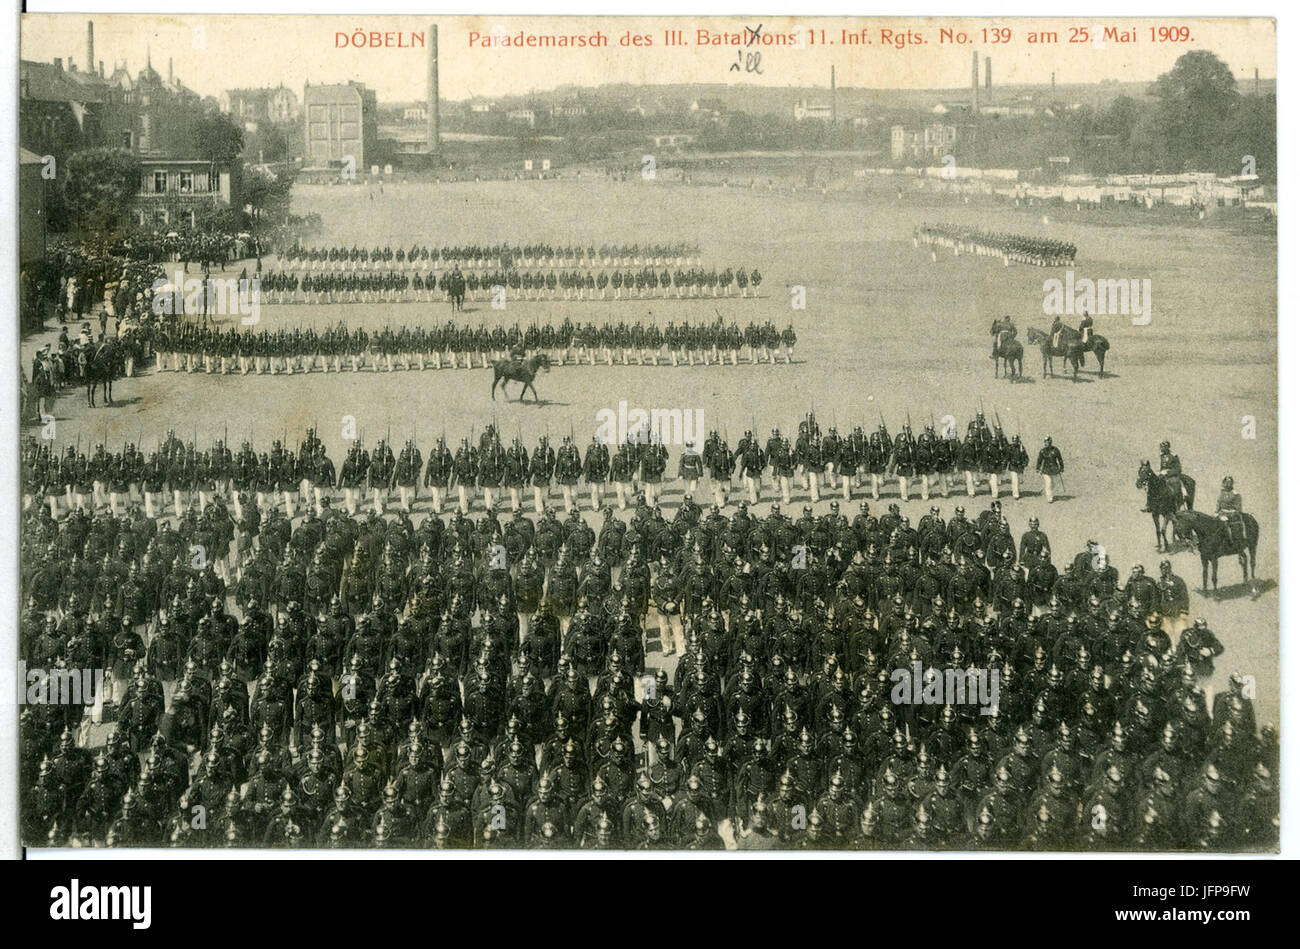 10826-Döbeln-1909-Parademarsch, 11. Infanterie-Regiment Nr. 139-Brück & Sohn Kunstverlag Stock Photo